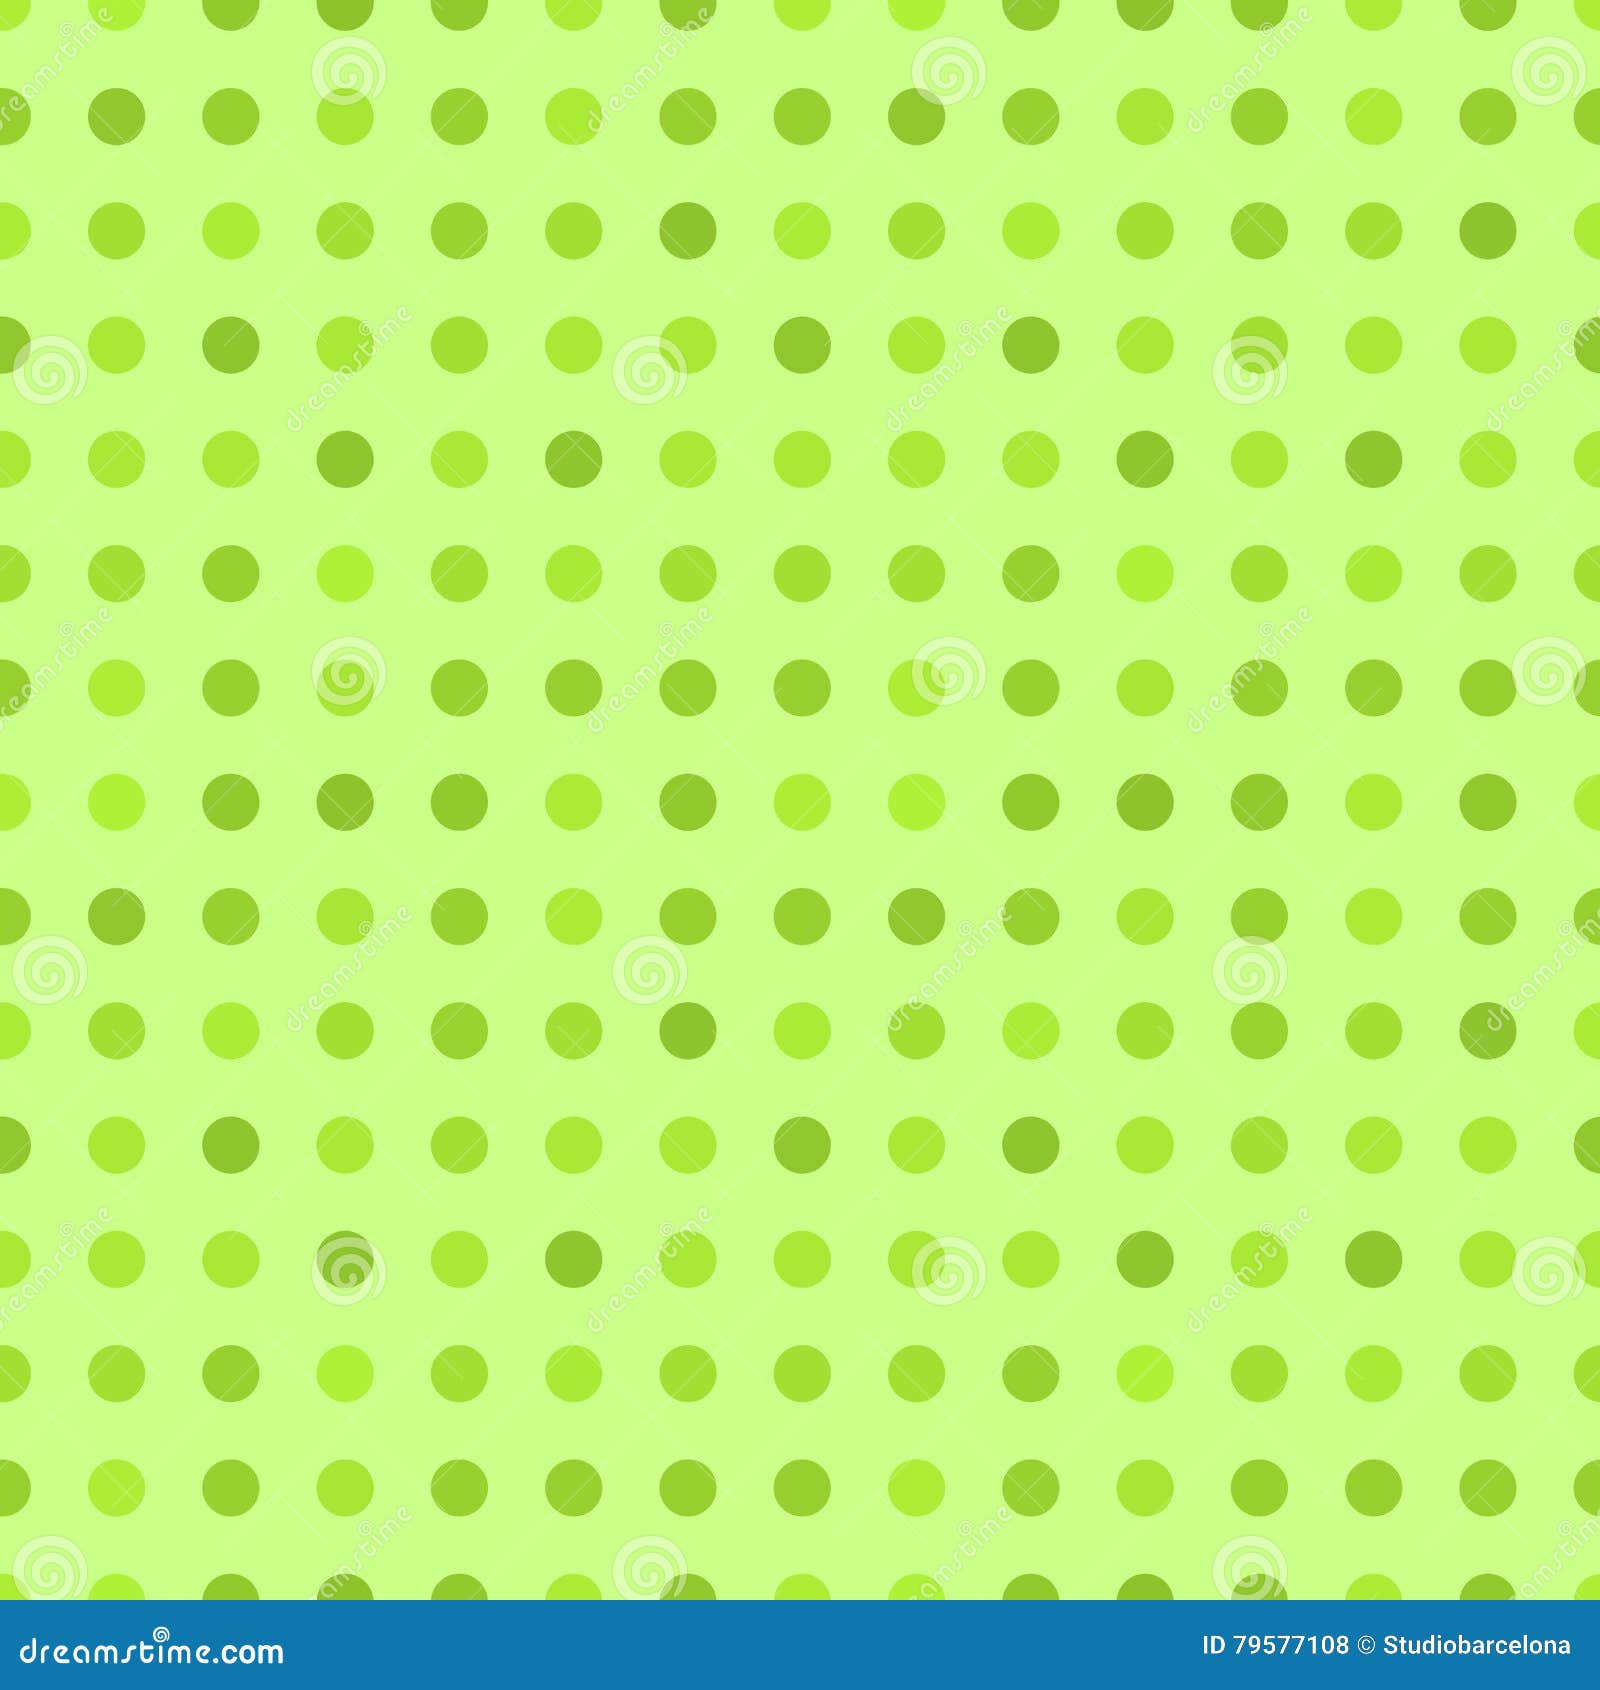 Green polka dot texture stock vector. Illustration of wallpaper - 79577108